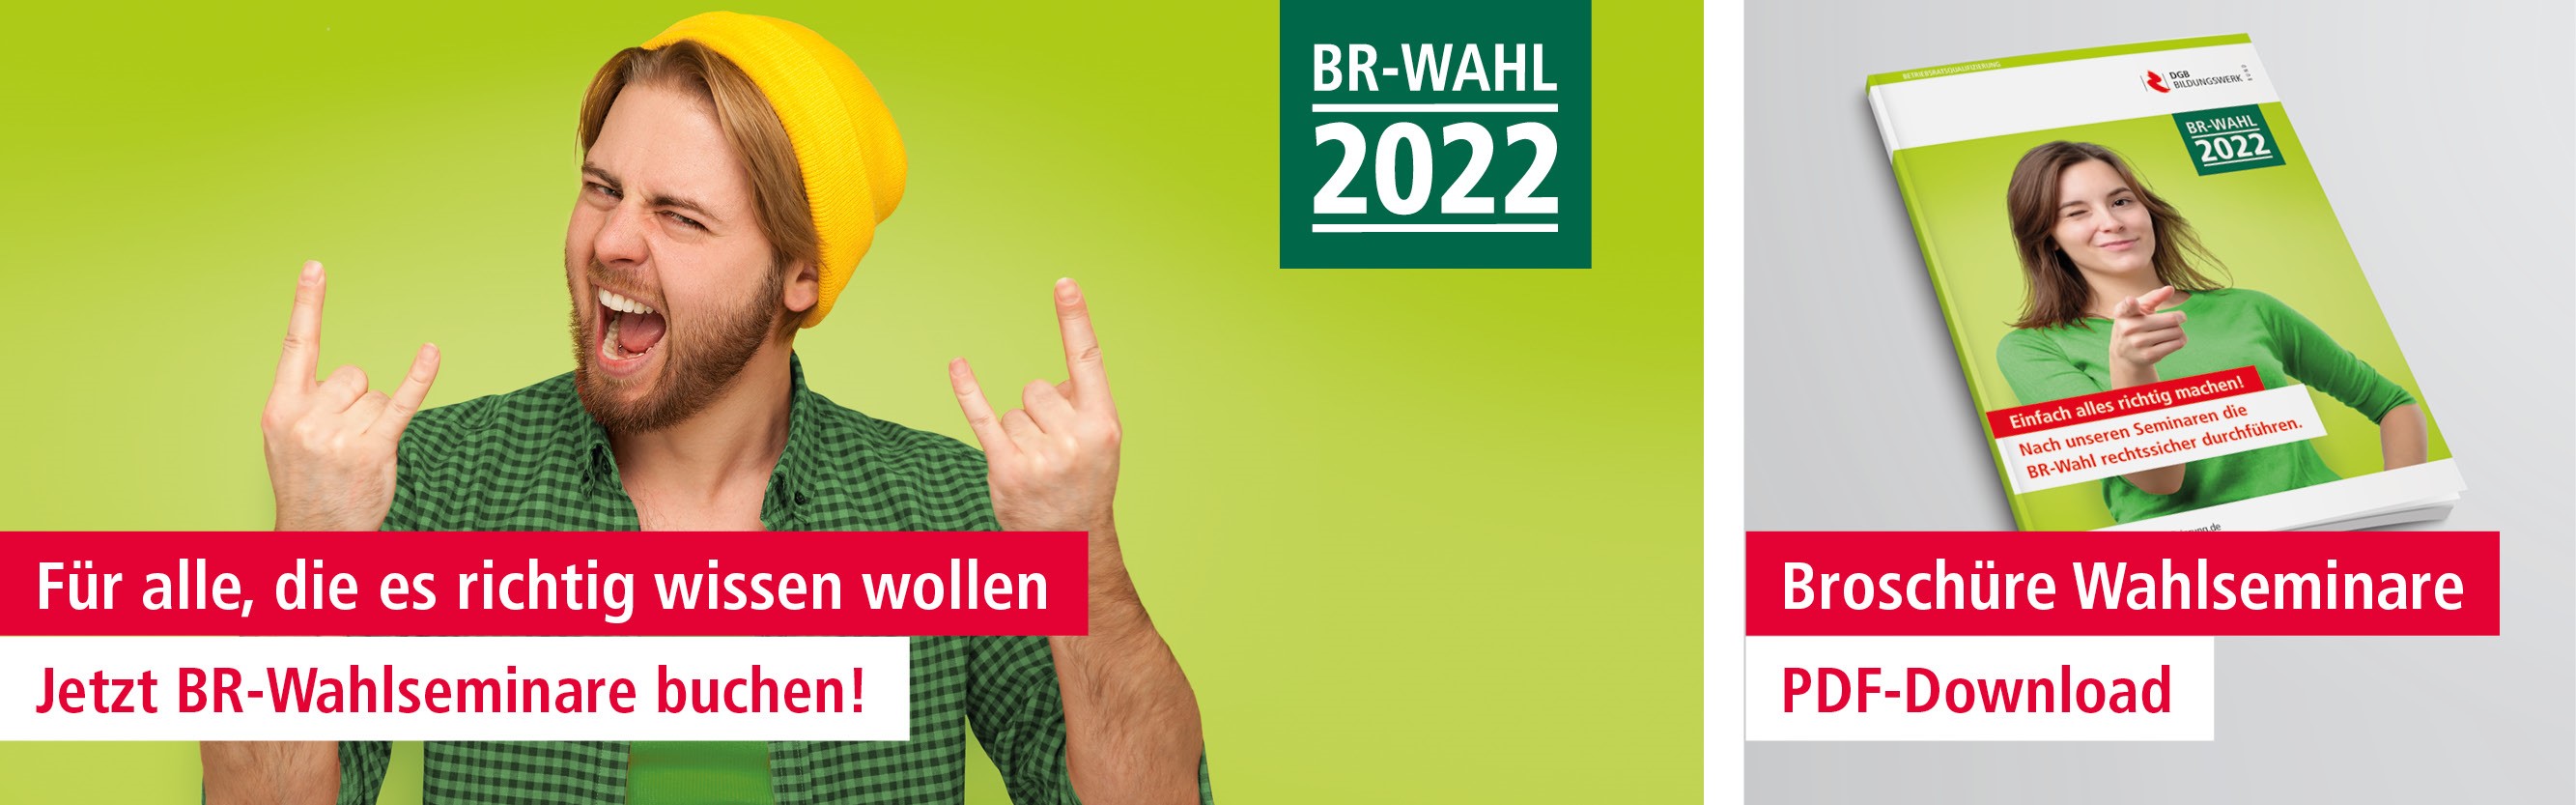 Header BR-Wahl 2022